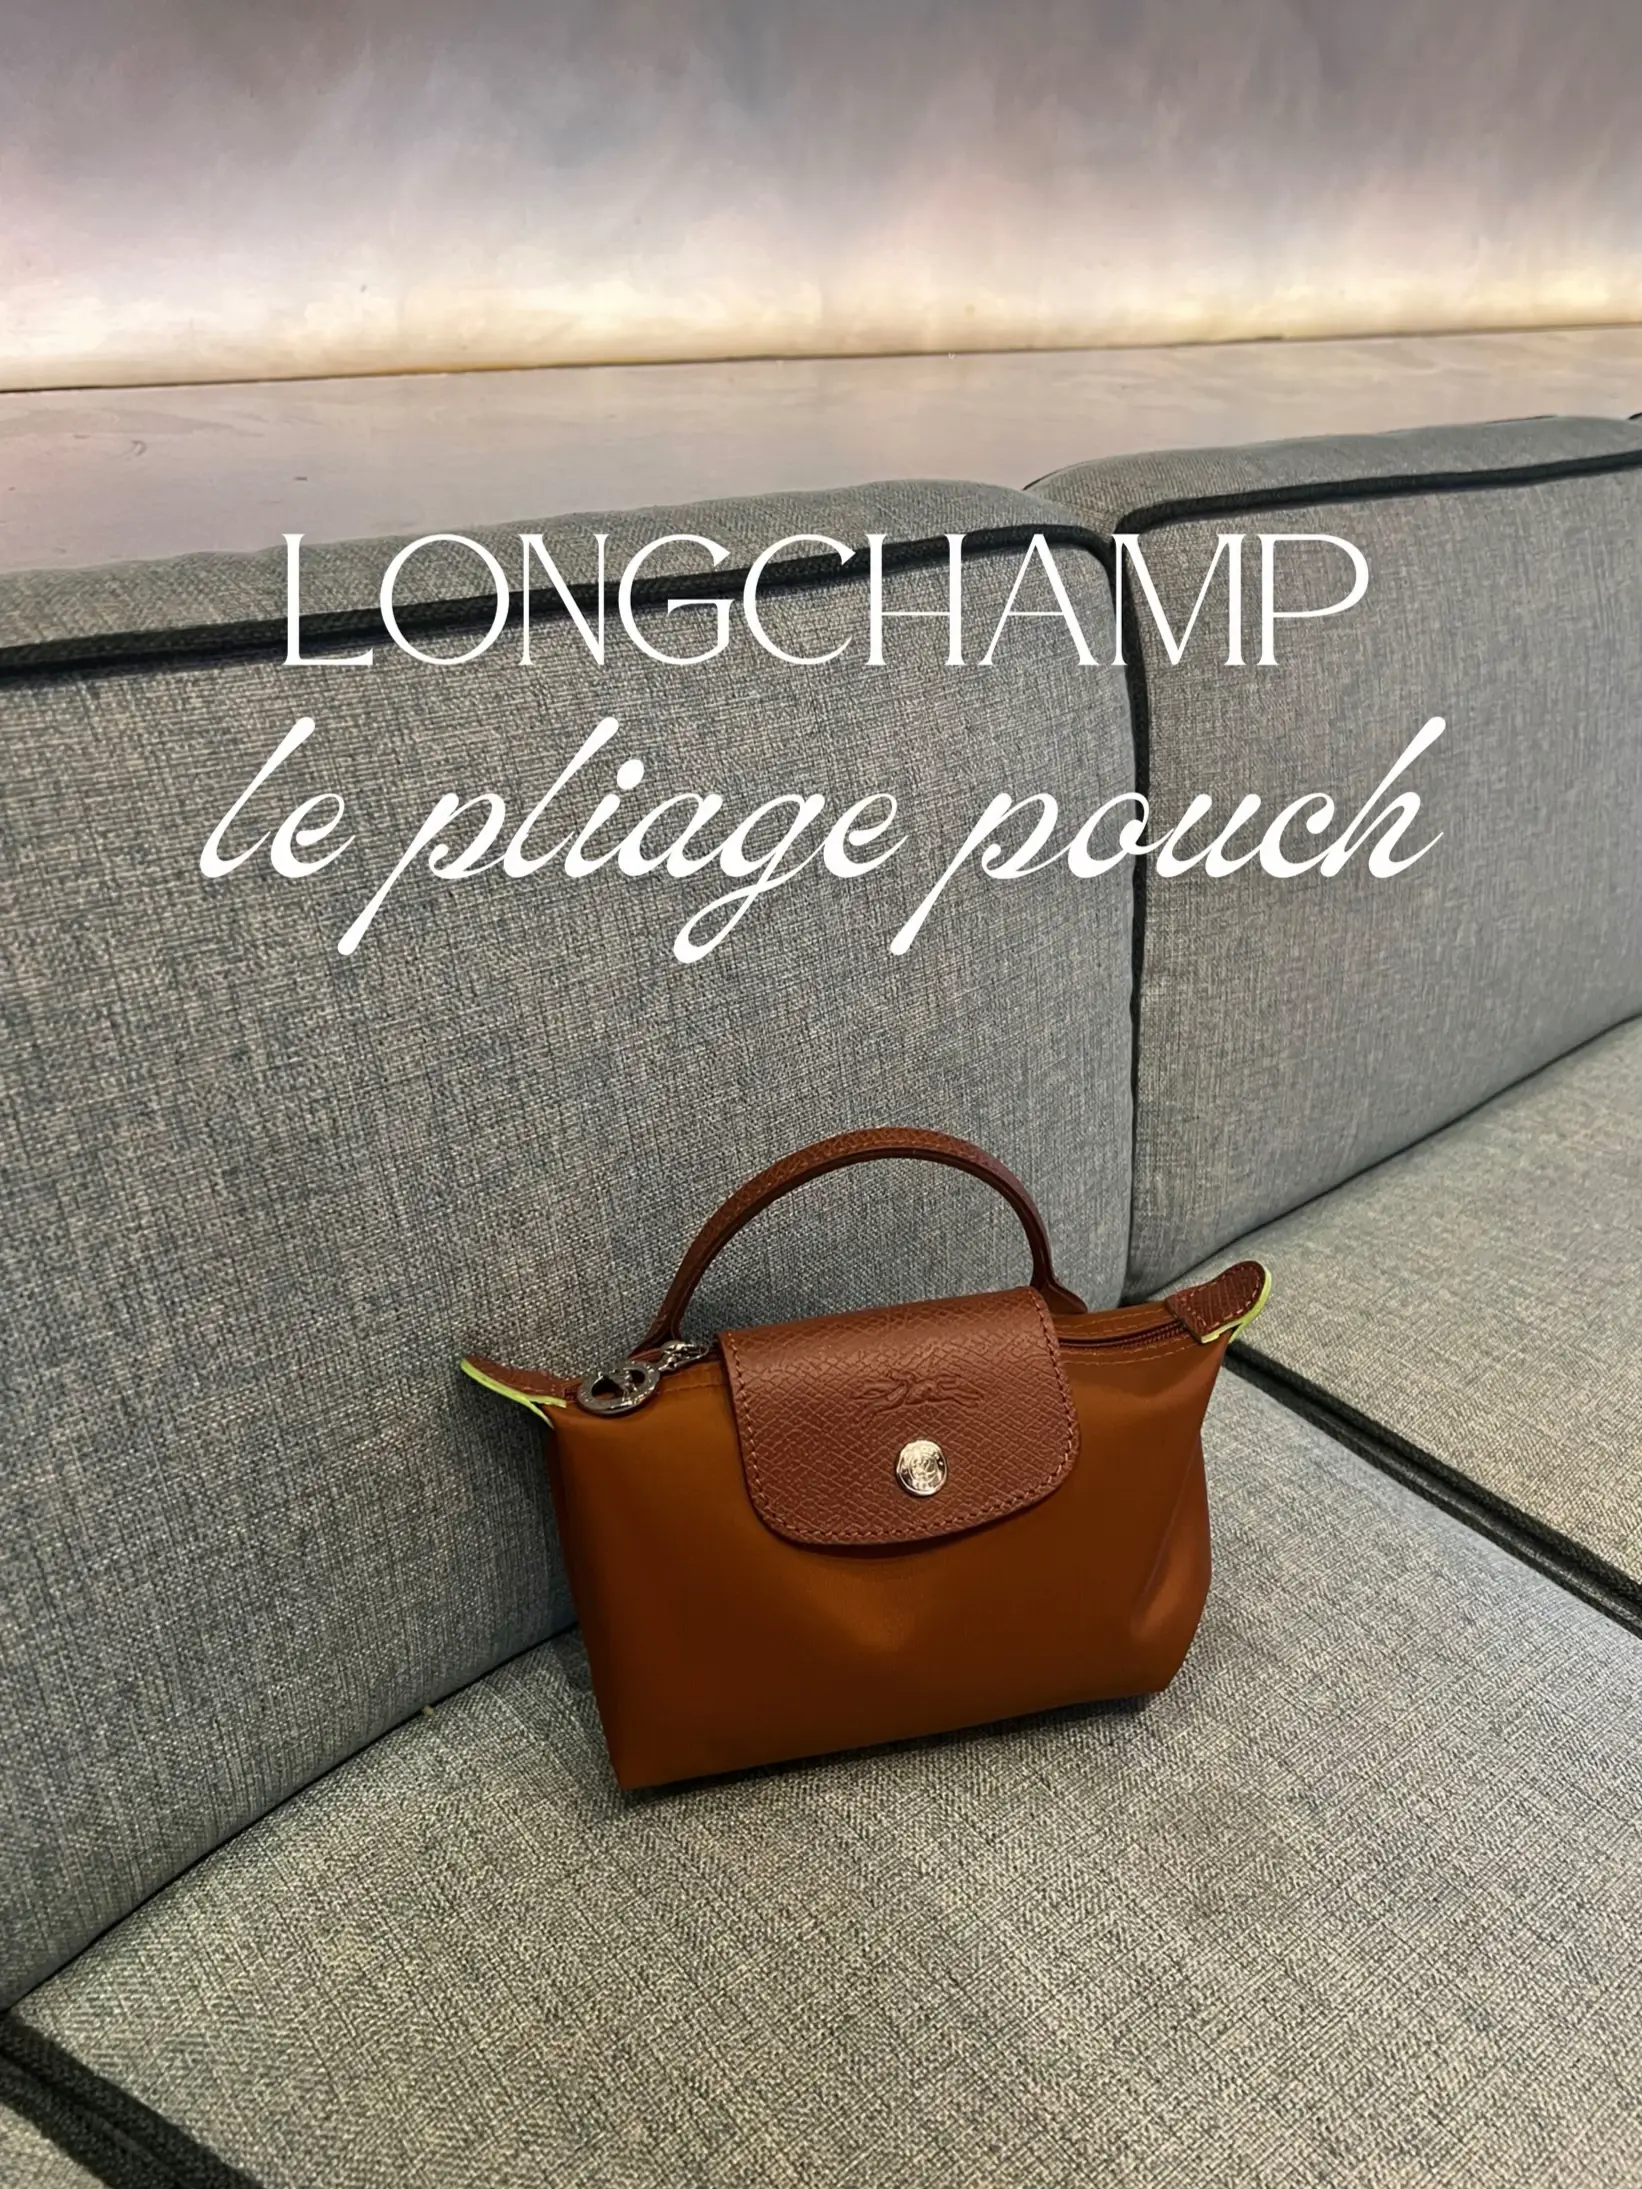 Longchamp Le Panier Pliage Basket Extra Small Tote - Brown/Gold